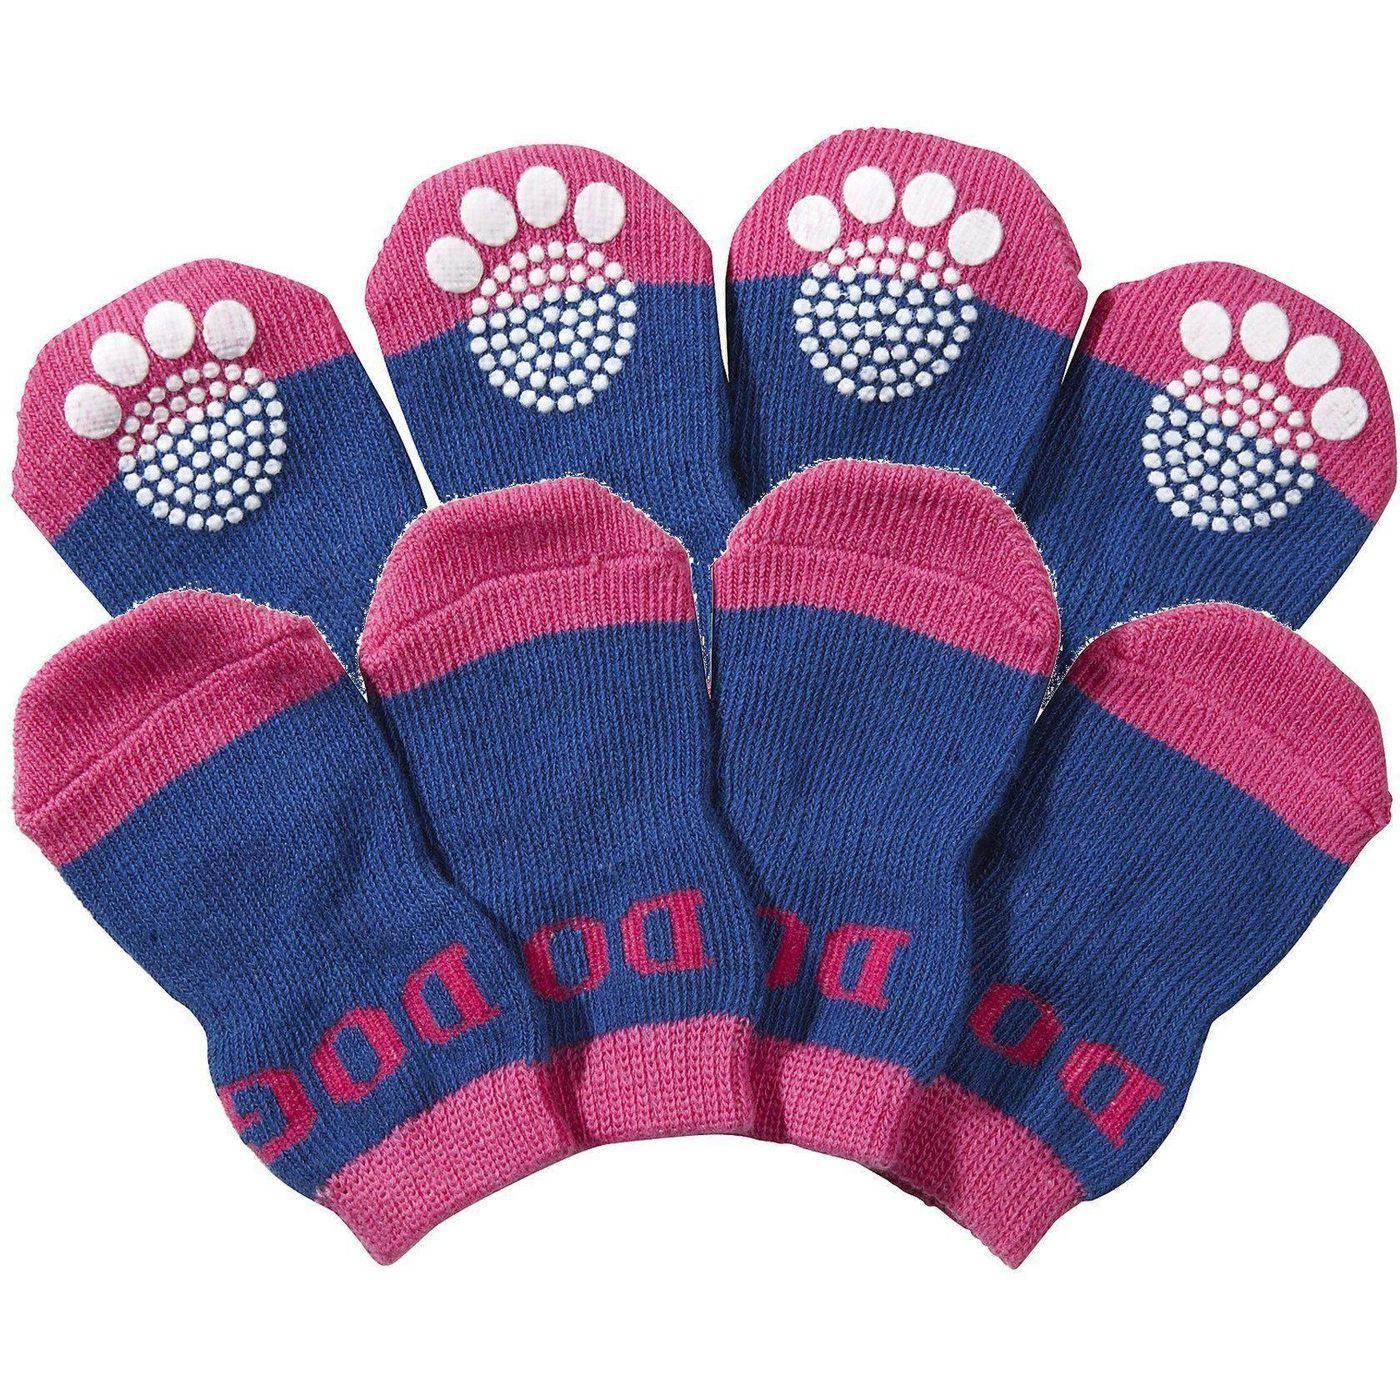 Pet Life Anti-Slip Rubberized Stretch Dog Socks - Purple & Blue